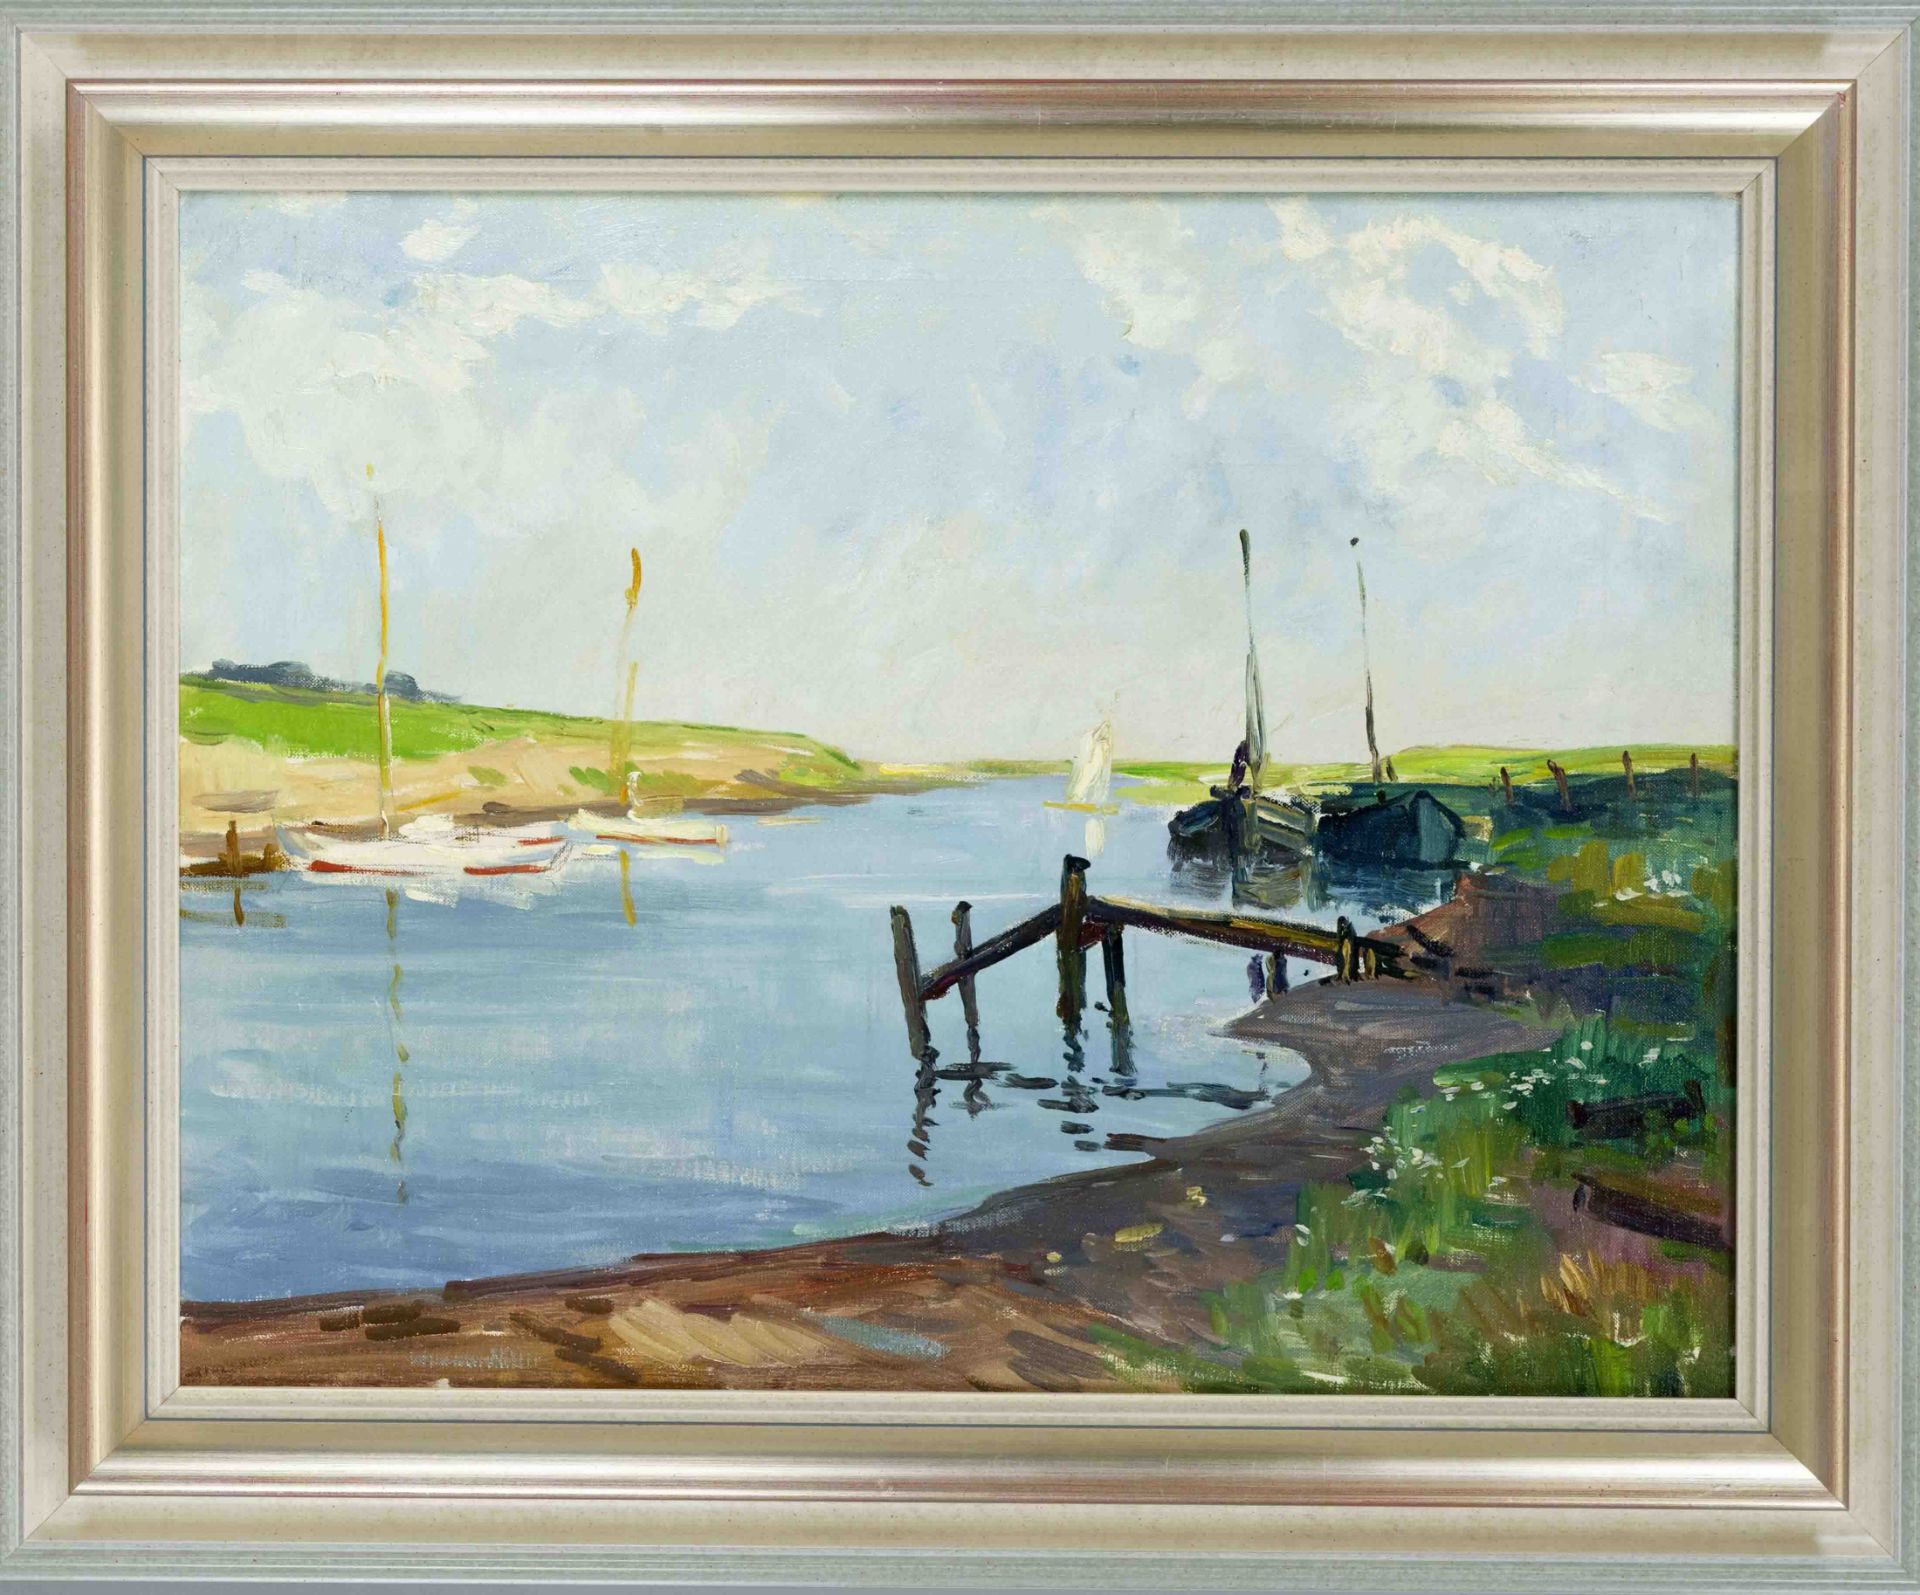 Paul Ernst Wilke (1894-1971), Bremerhaven landscape painter active in Worpswede, "Rüstersiel", oil